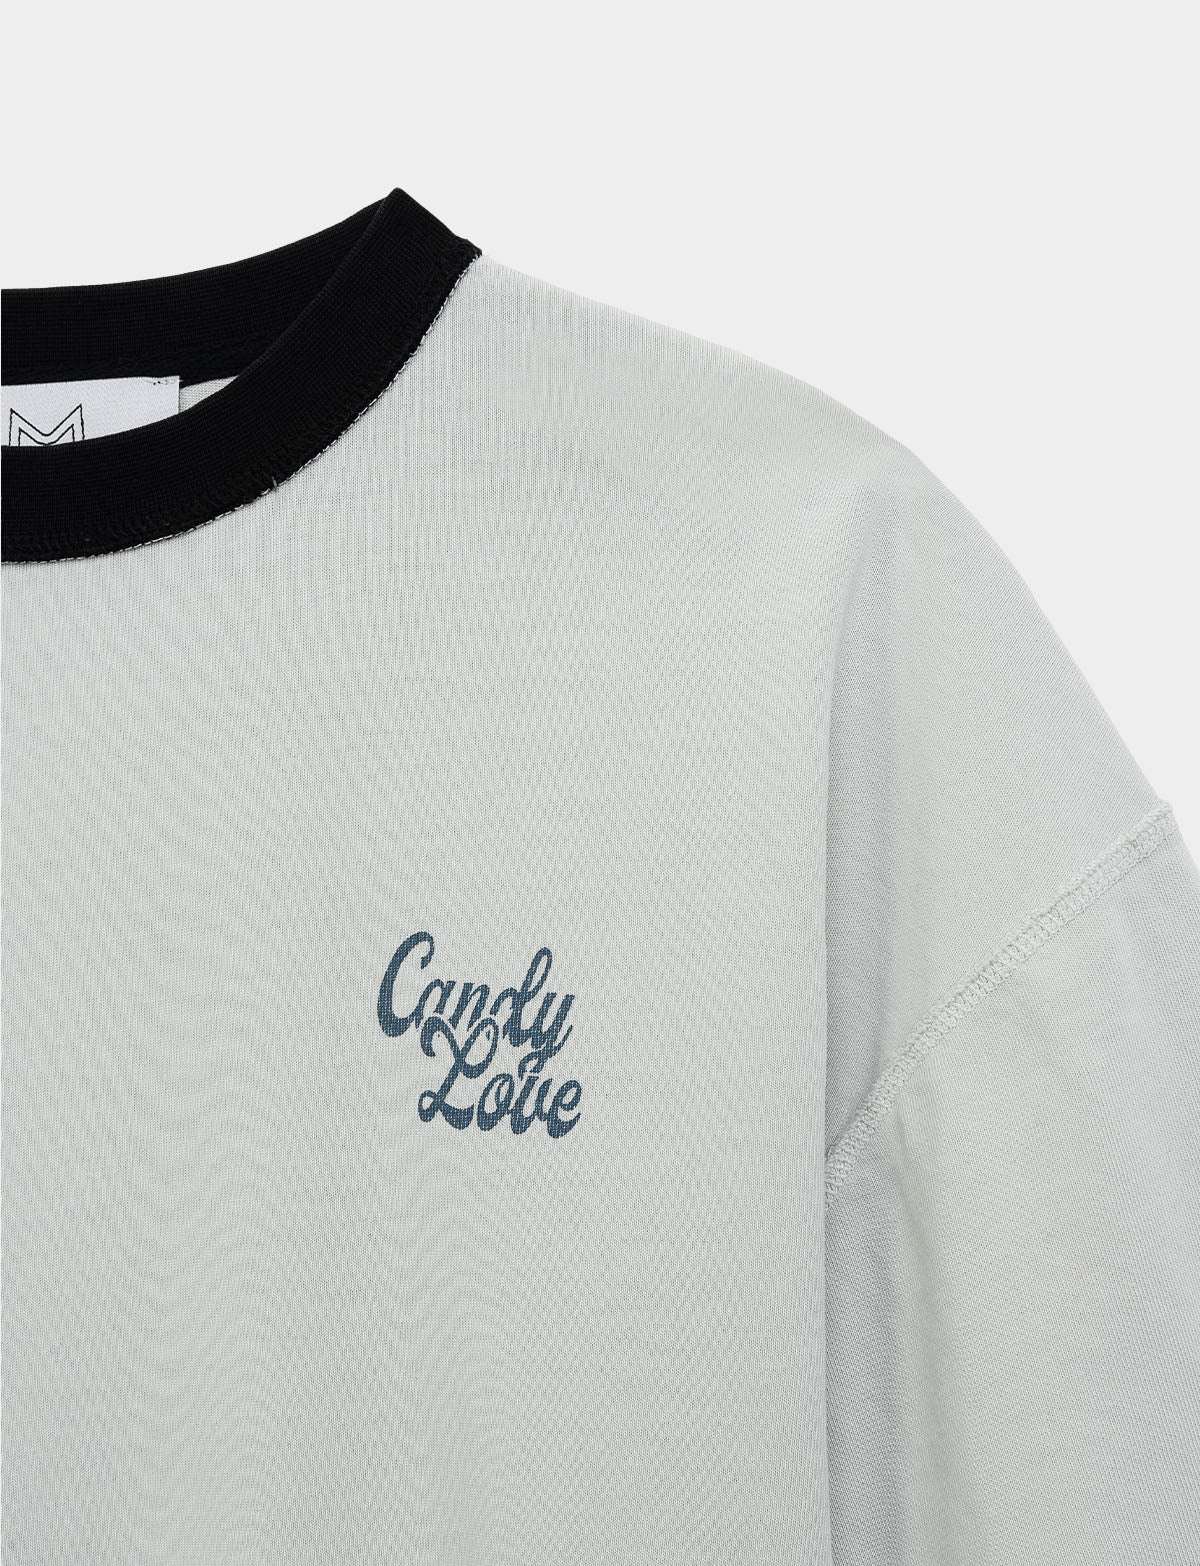 Candy love contrast Tee - jakkalclo